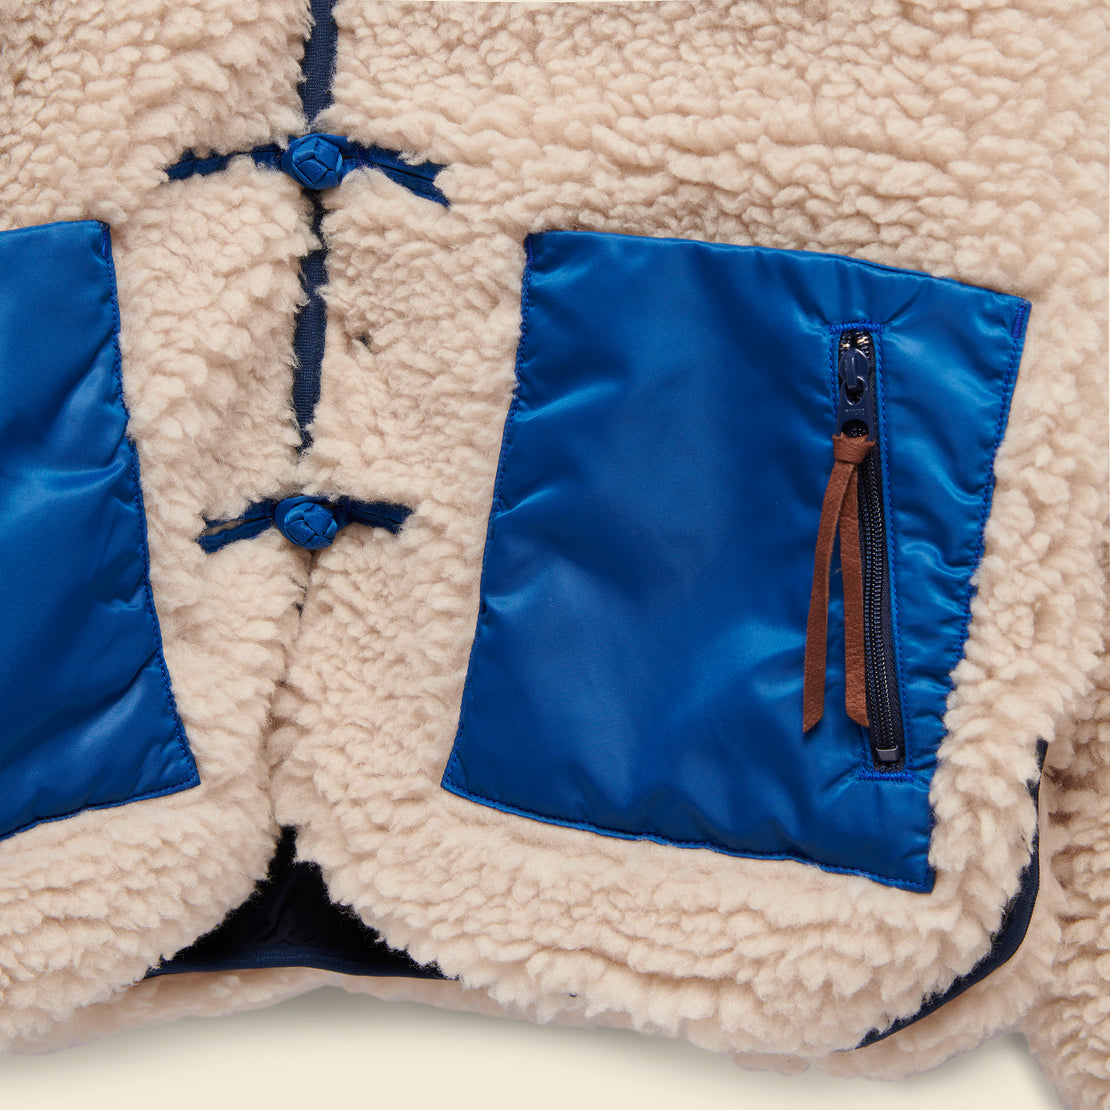 Boa Fleece Makanai Jacket - Ecru - Kapital - STAG Provisions - W - Outerwear - Coat/Jacket